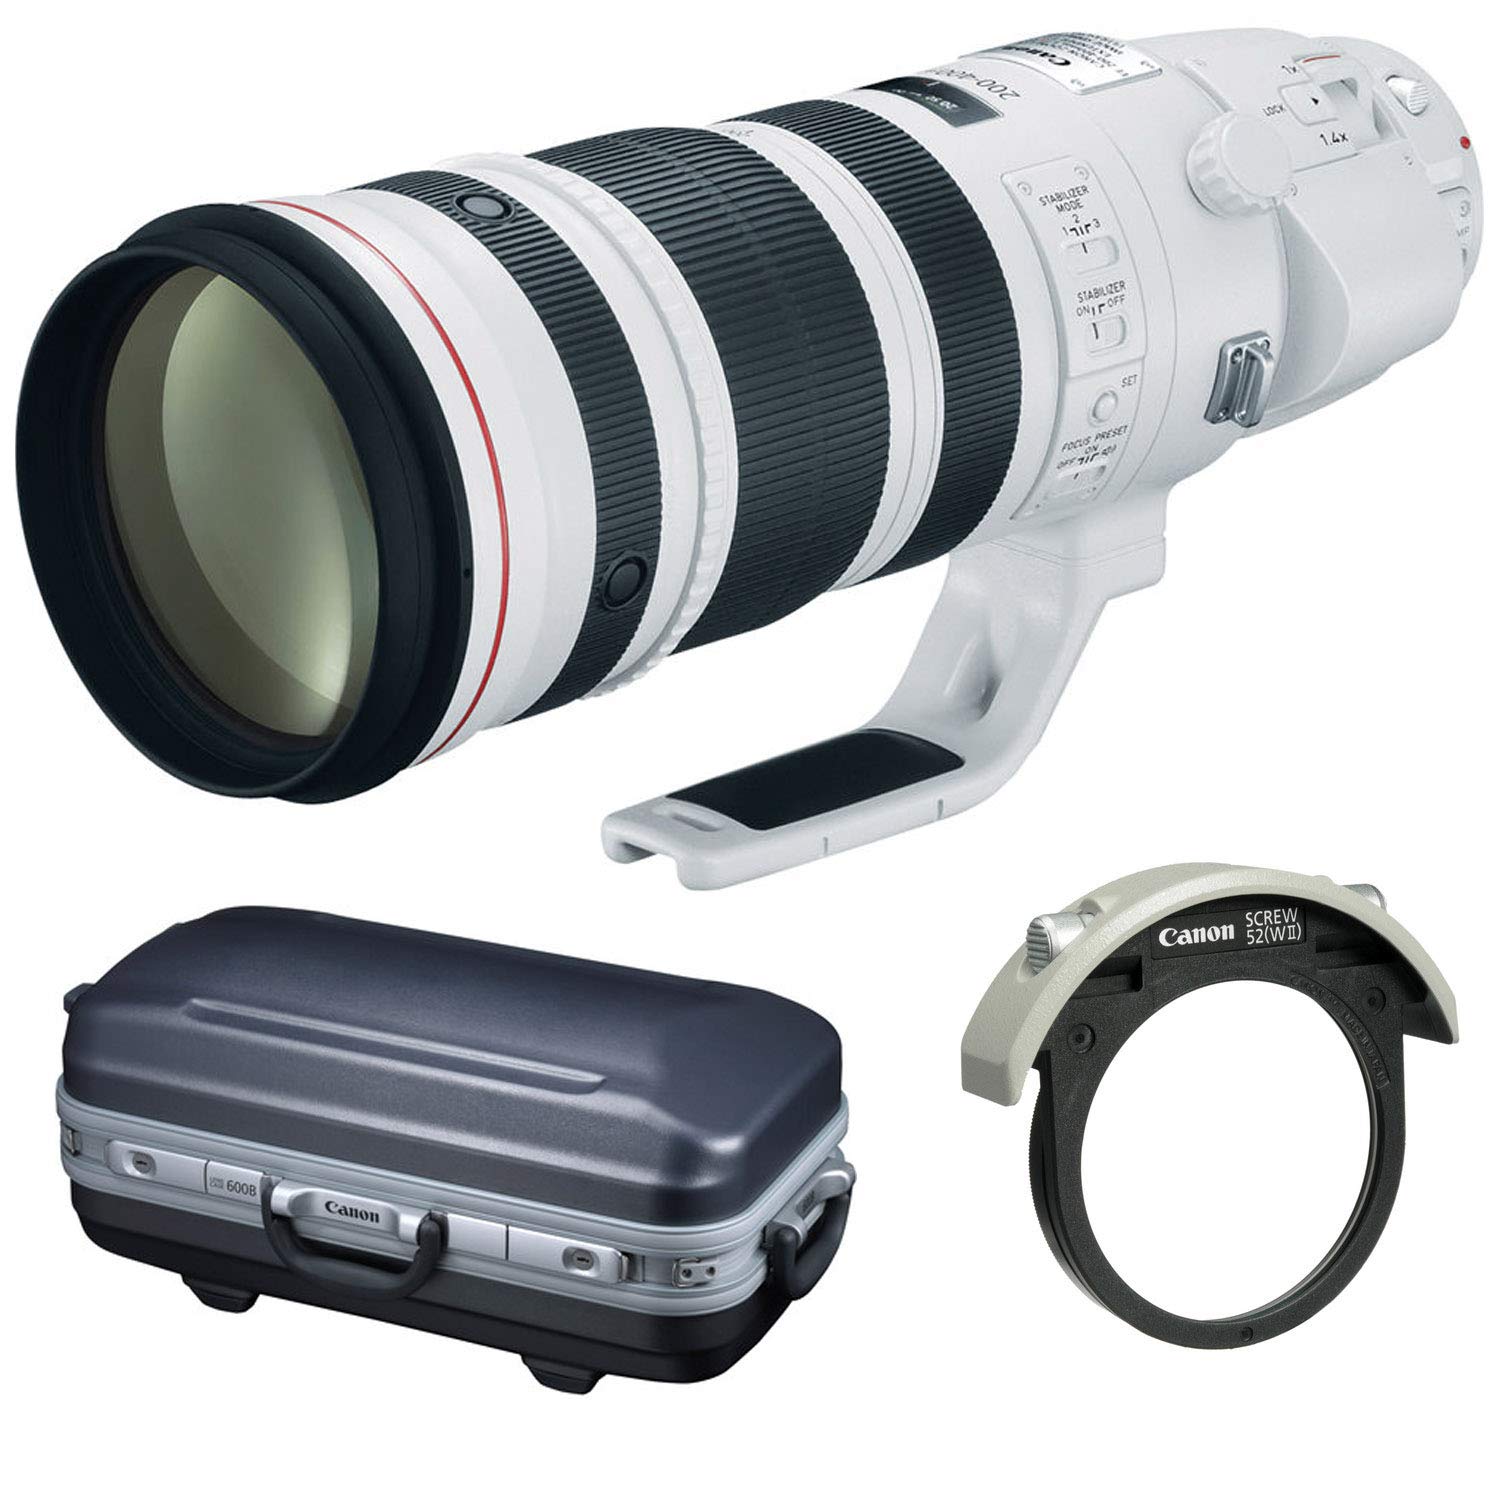 Canon EF 200-400mm f/4L is USM with Built-in Extender 1.4X Lens International Model Bundle